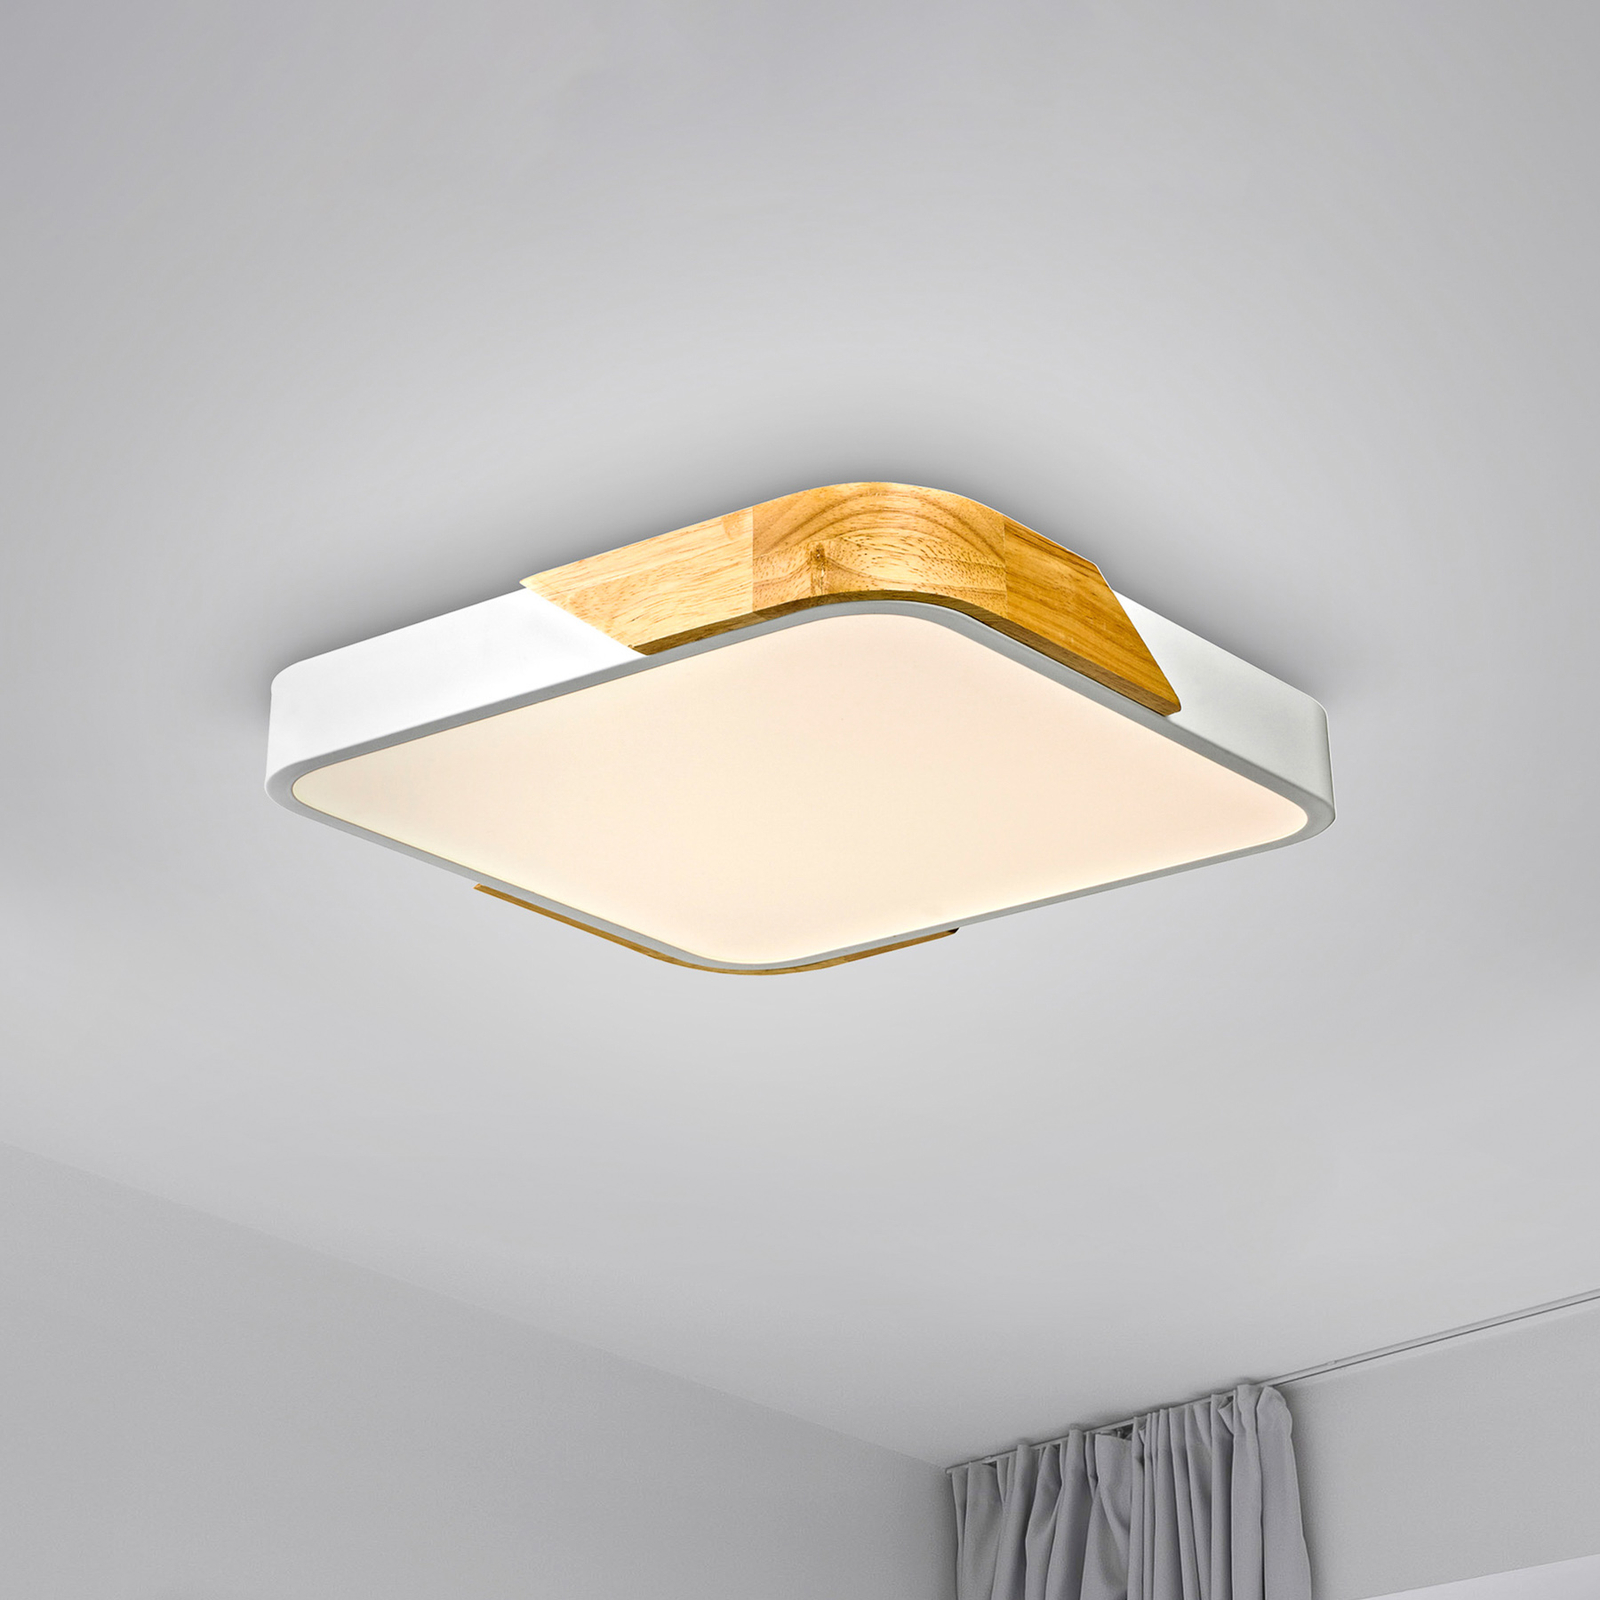 JUST LIGHT. Lampa sufitowa LED Bila, biała, 32x32 cm, drewno